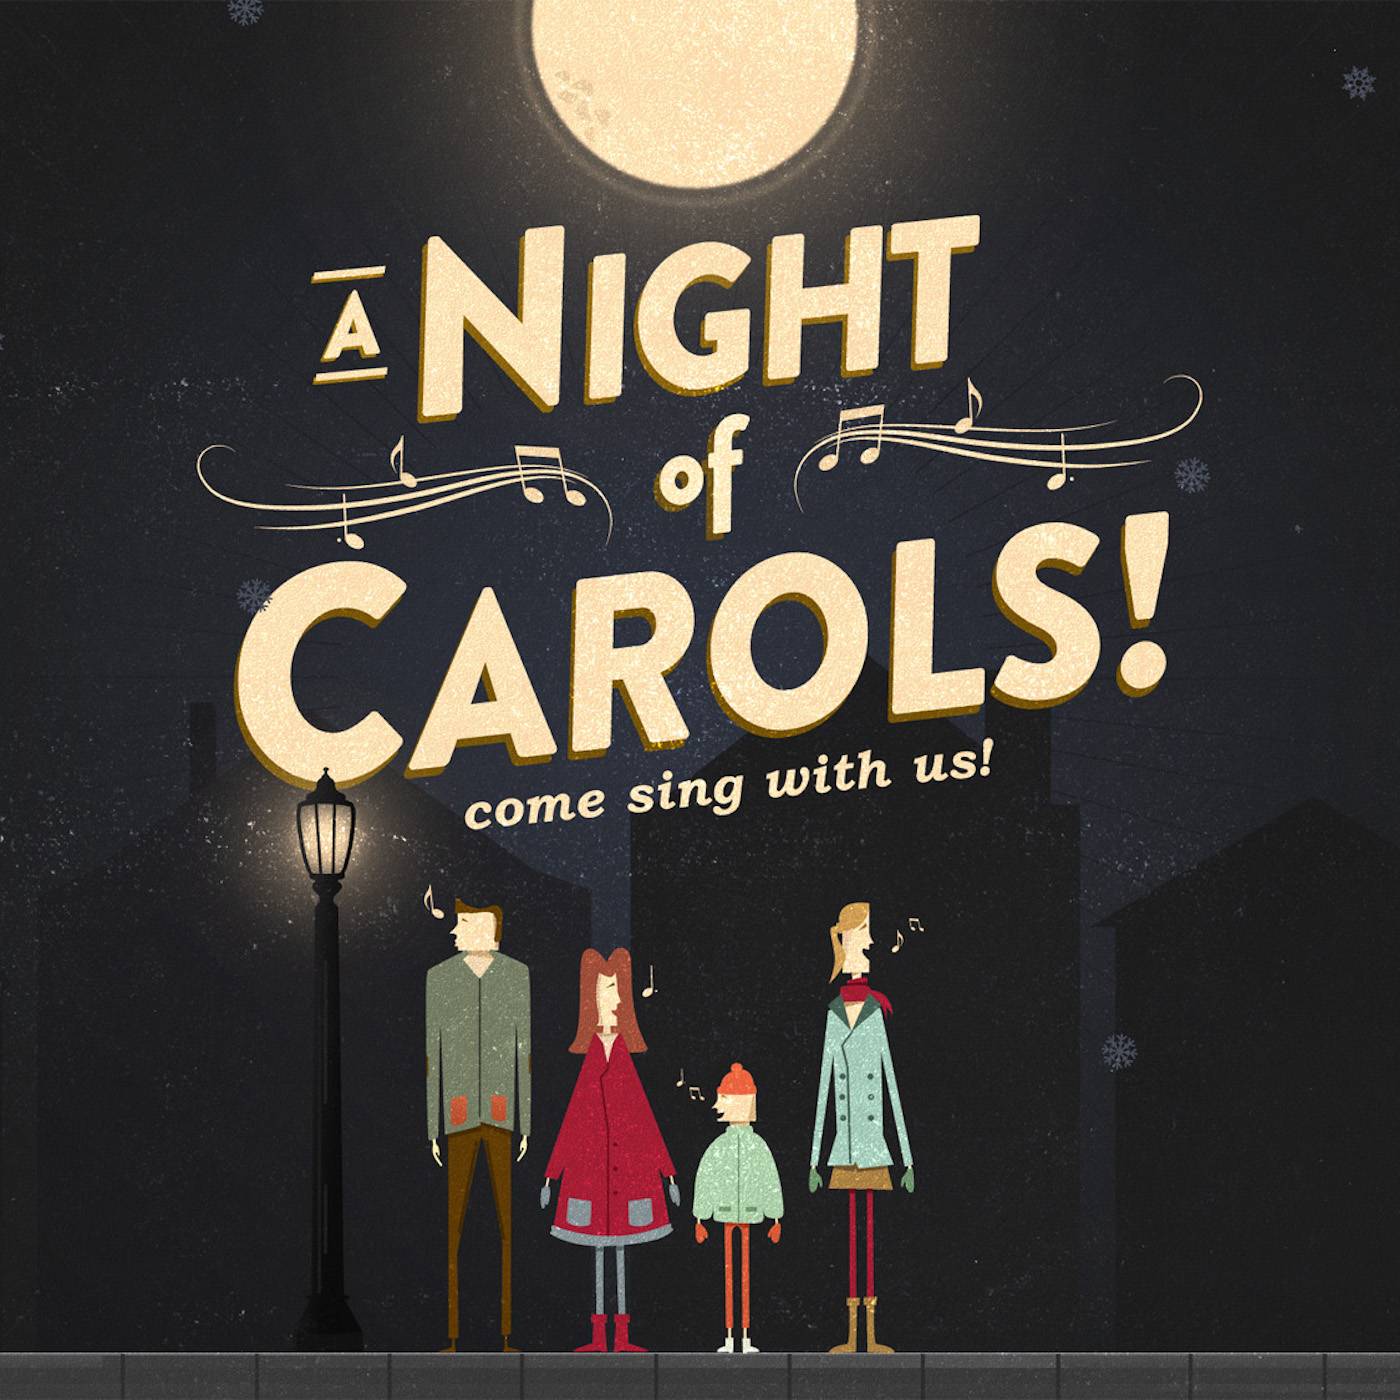 night of caroling website image